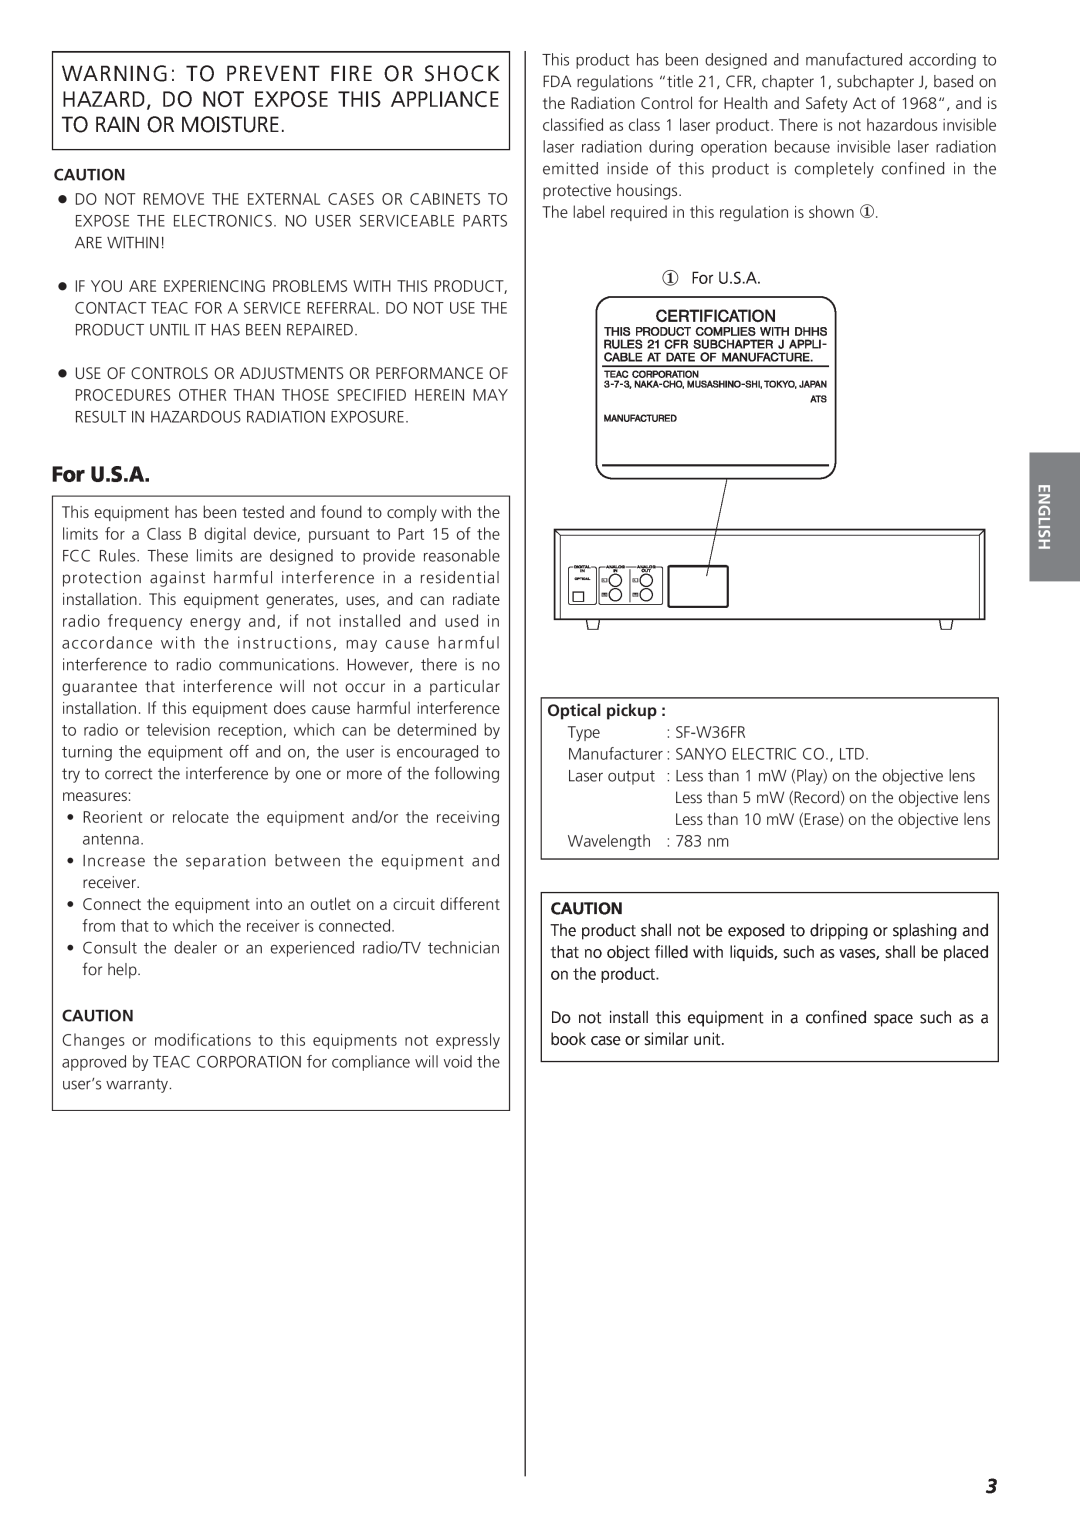 Sanyo CD-RW880 owner manual For U.S.A, English 